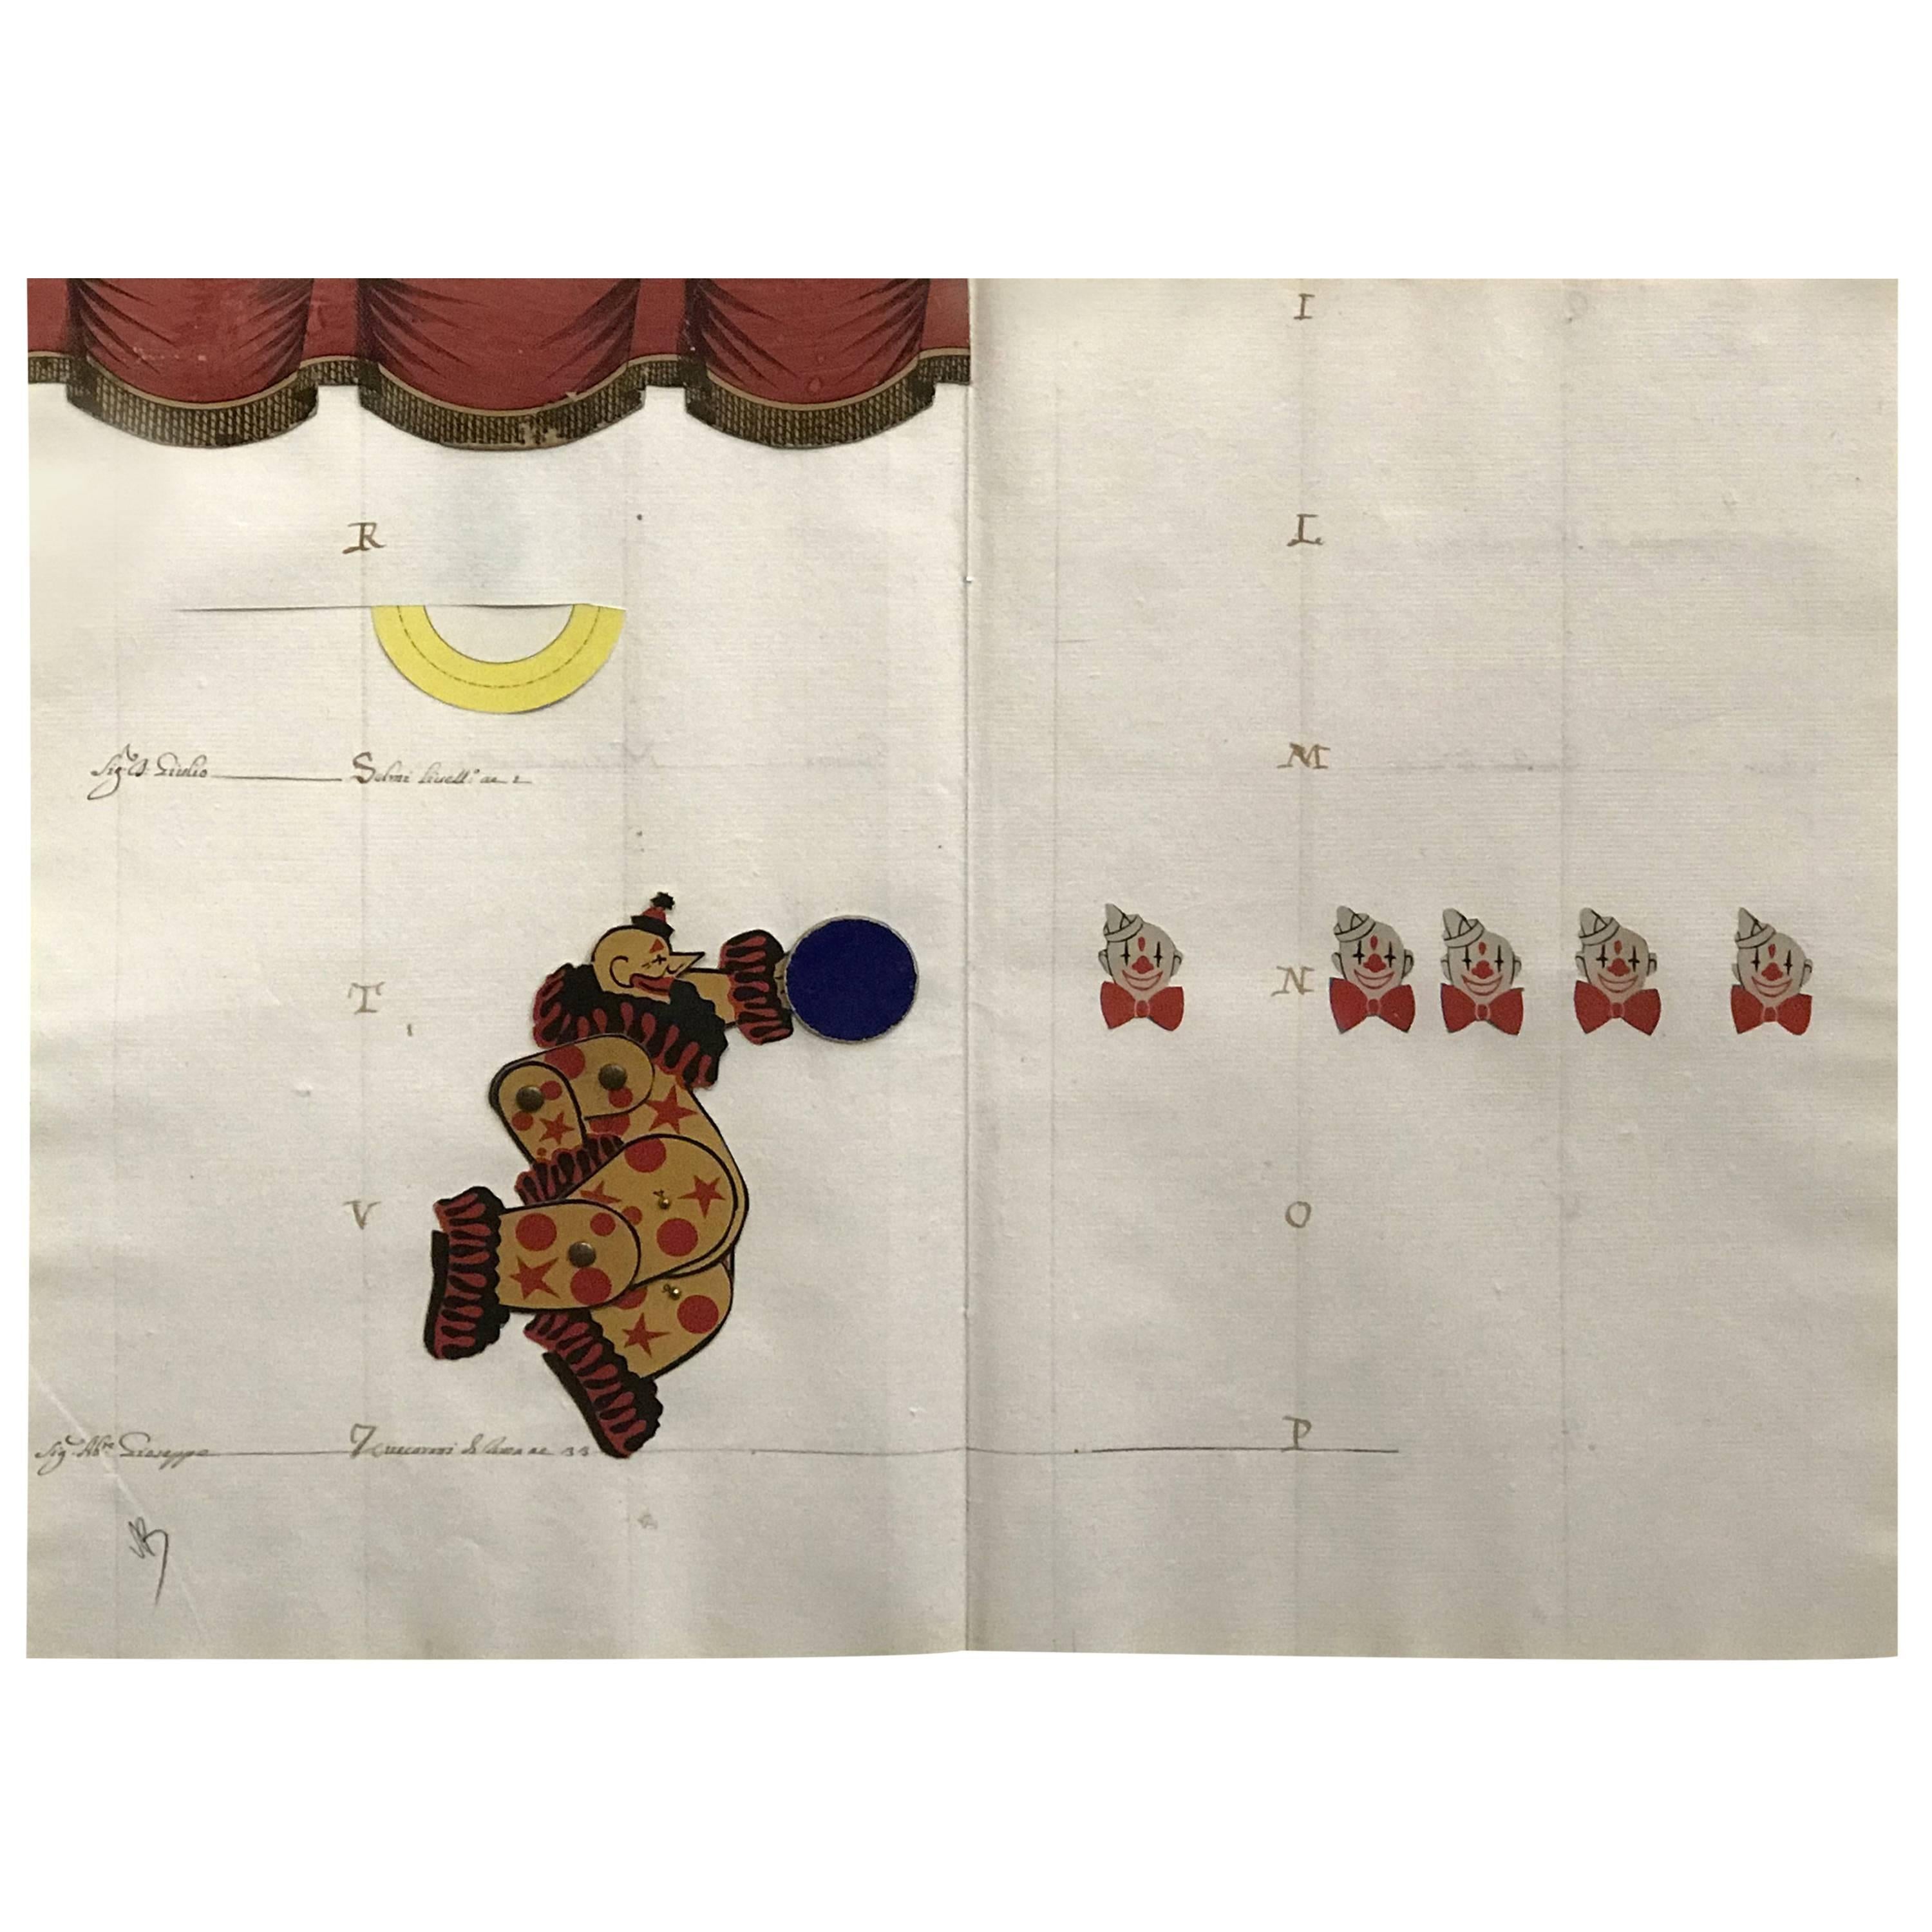 Varujan Boghosian Framed Paper Collage with Clowns